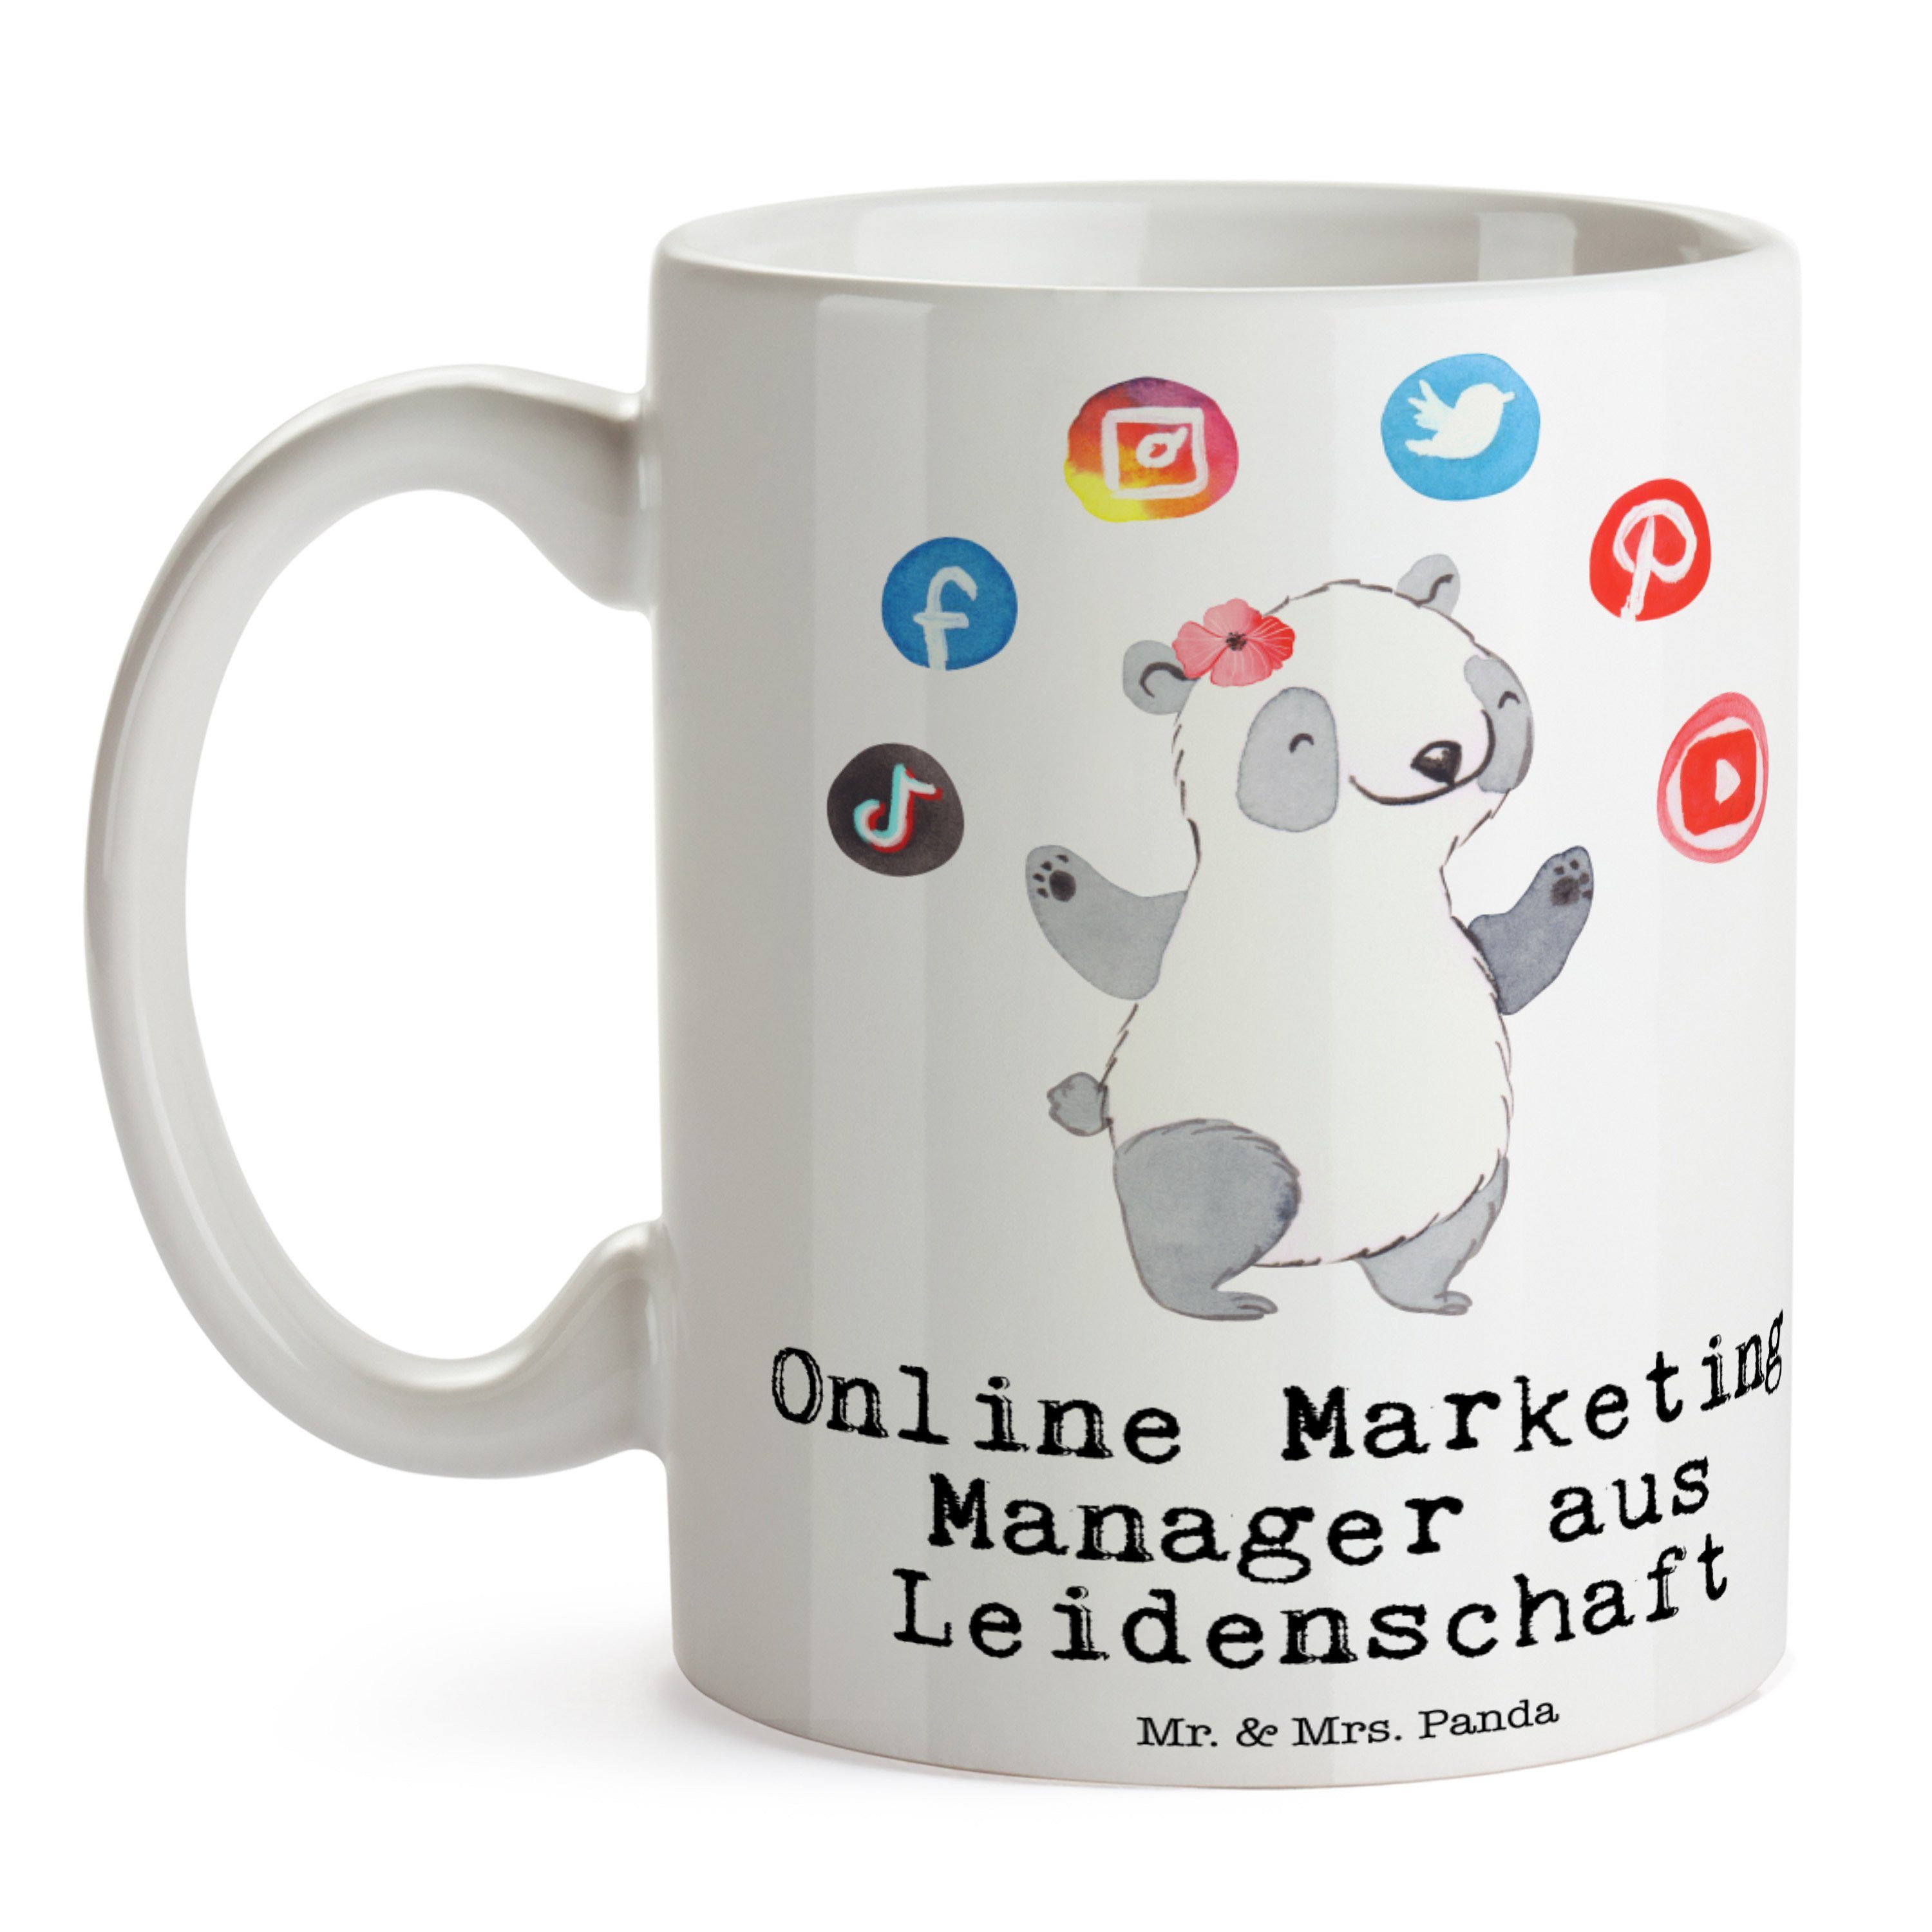 Manager Online Marketing Leidenschaft aus Mrs. - Geschenk, Panda Mr. Kaffeebe, - & Keramik Tasse Weiß